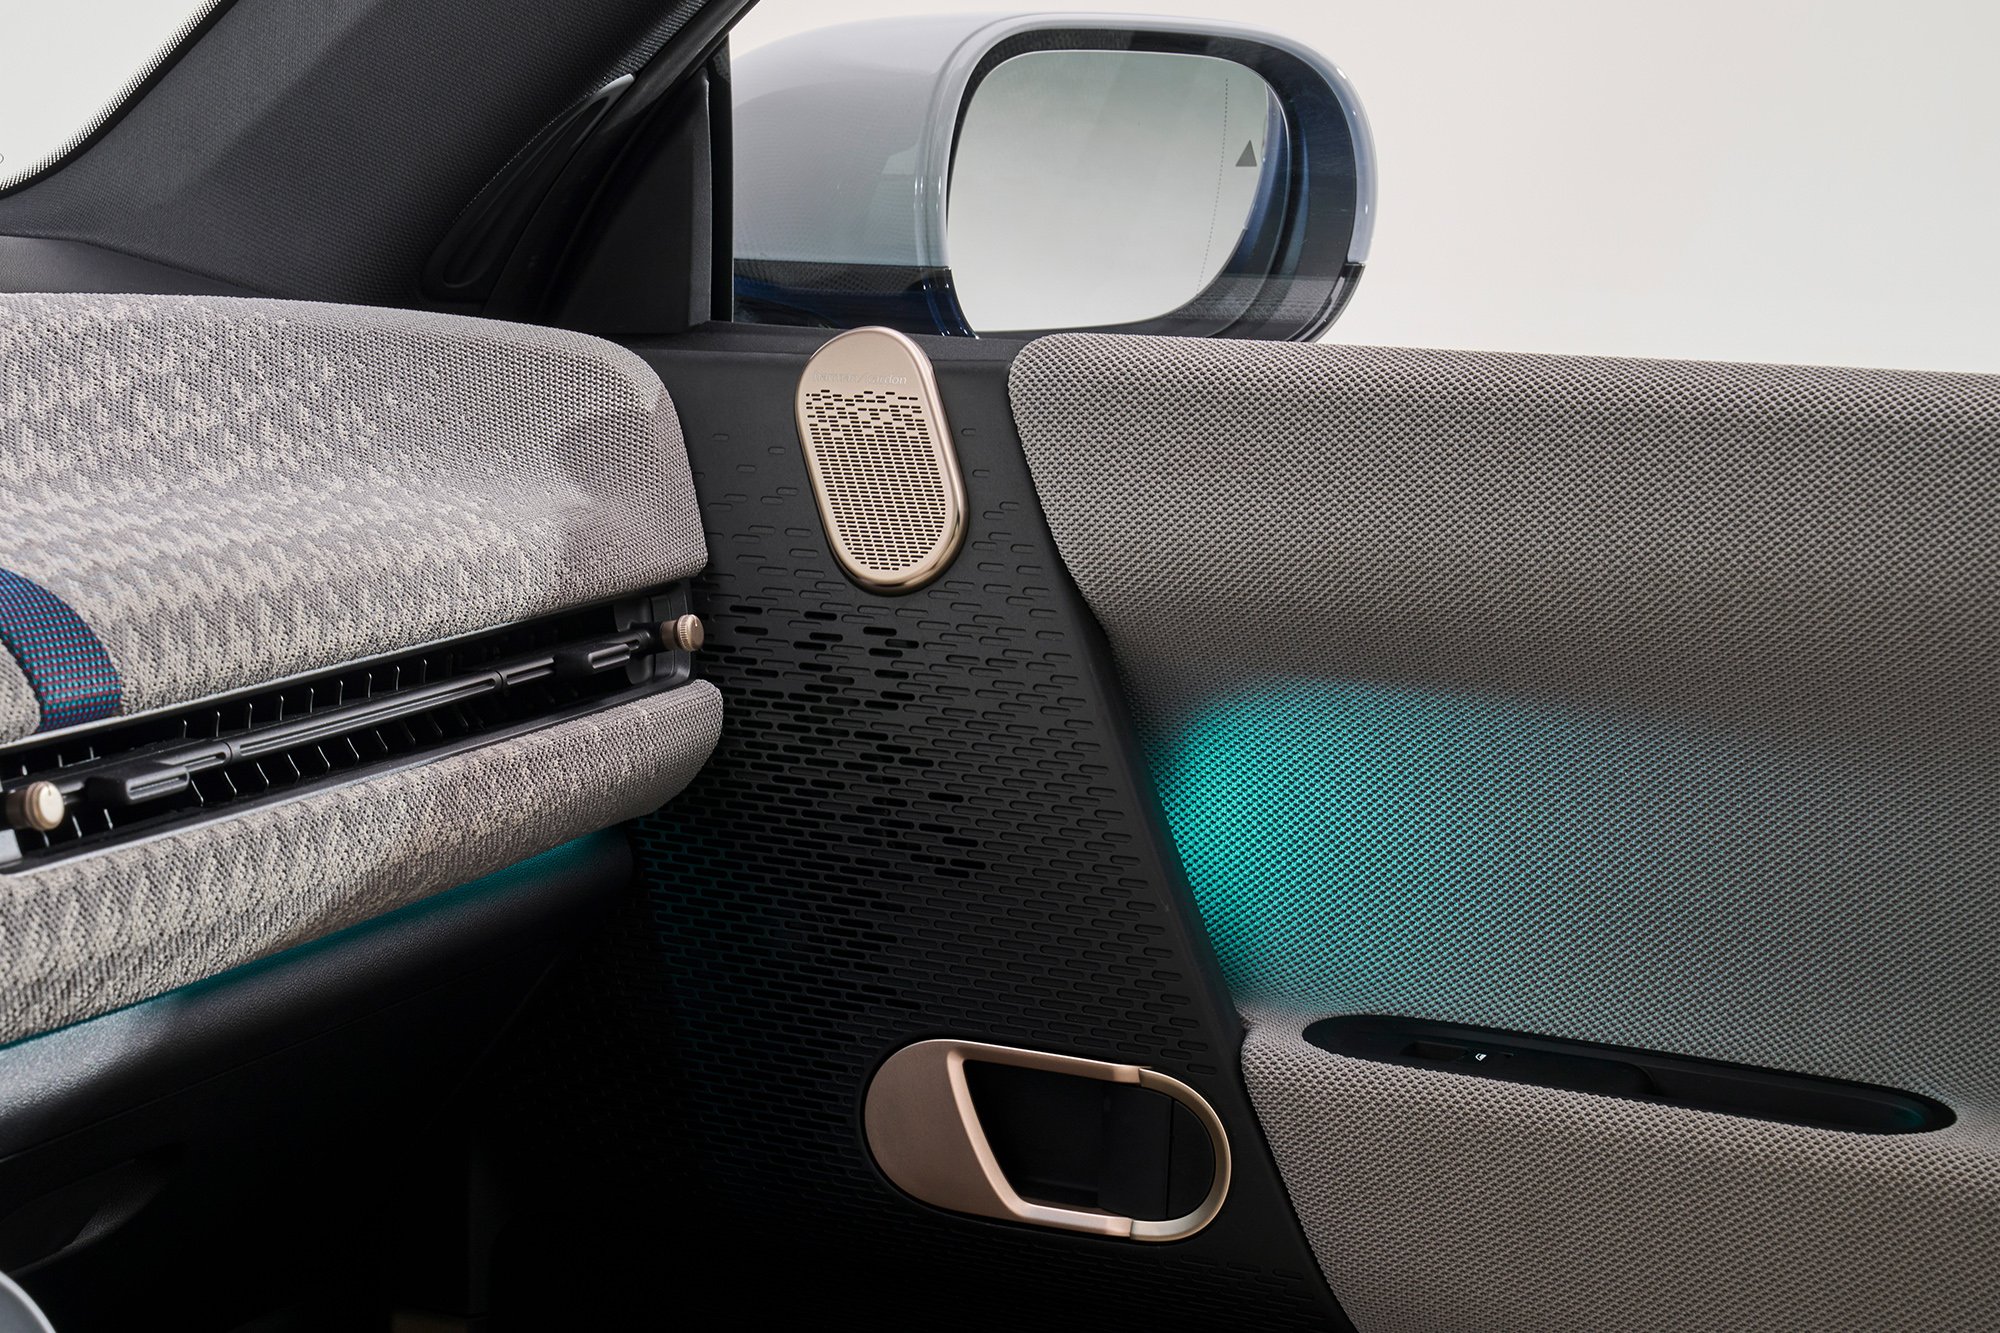 The interior design of the new all-electric MINI Cooper Electric